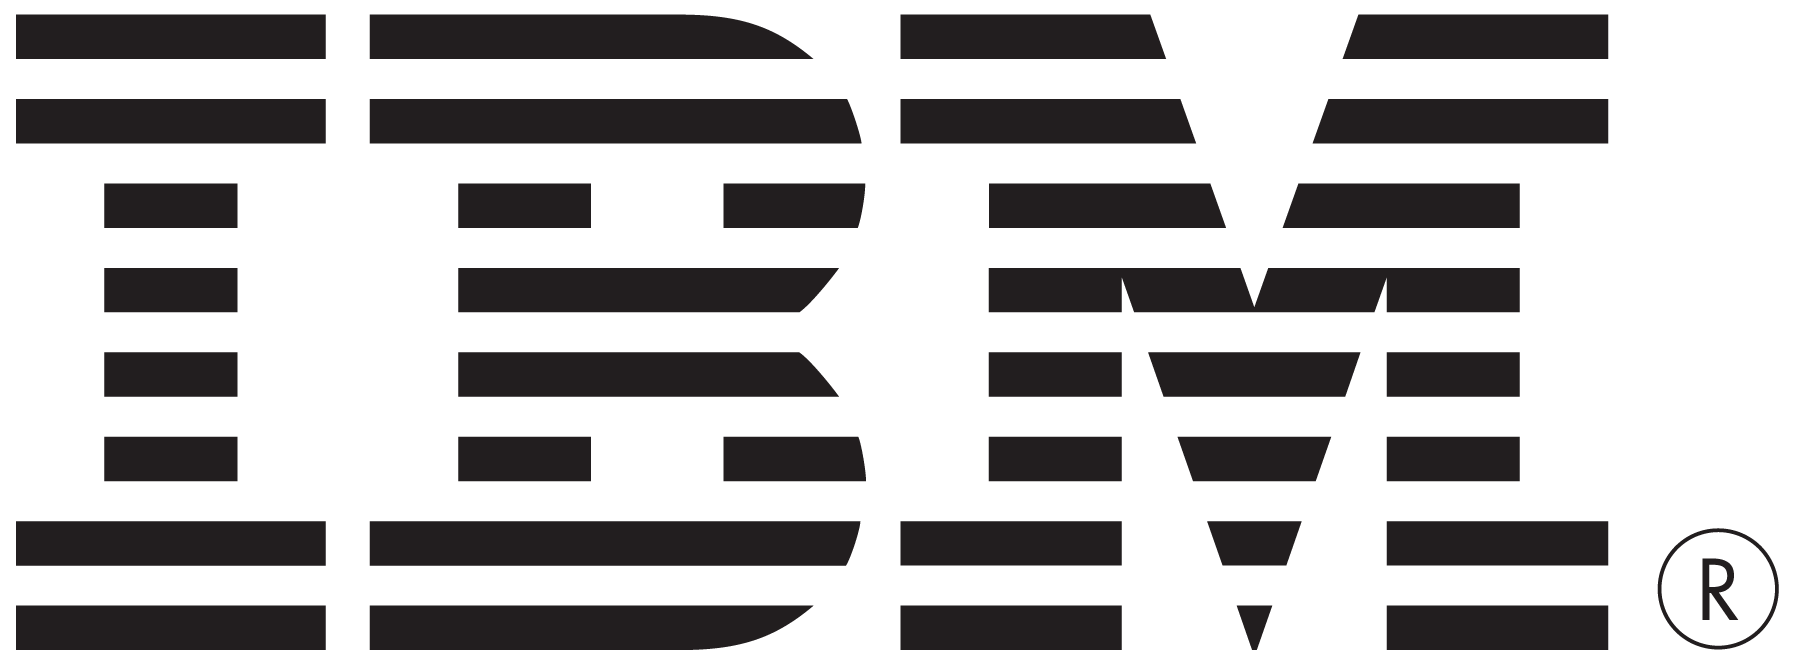 IBM Company Logo - ibm-logo - The NonProfit Times